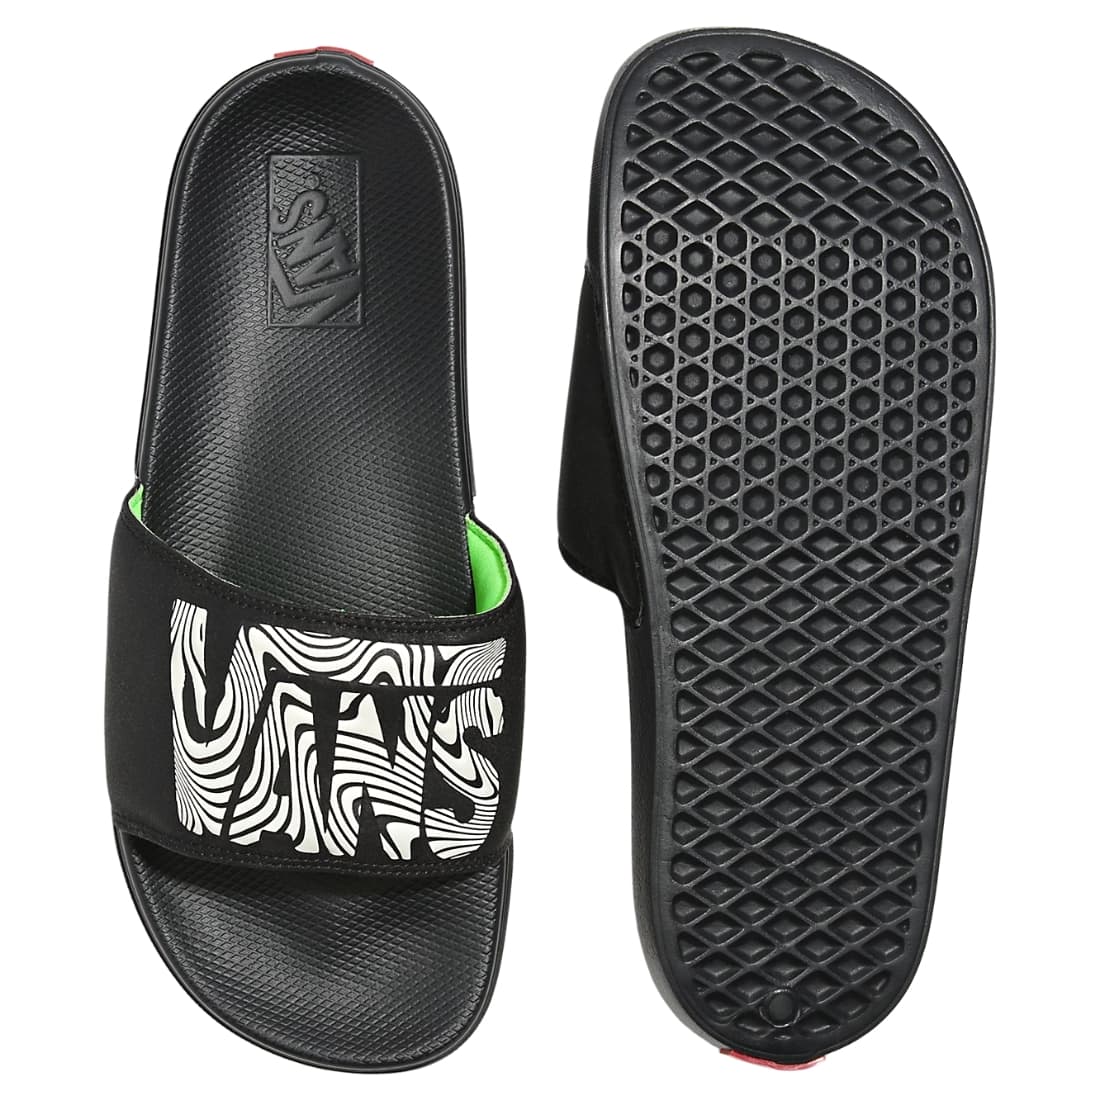 Vans La Costa Slide Sandals - Trippy Grain Black/Black - Mens Flip Flops by Vans